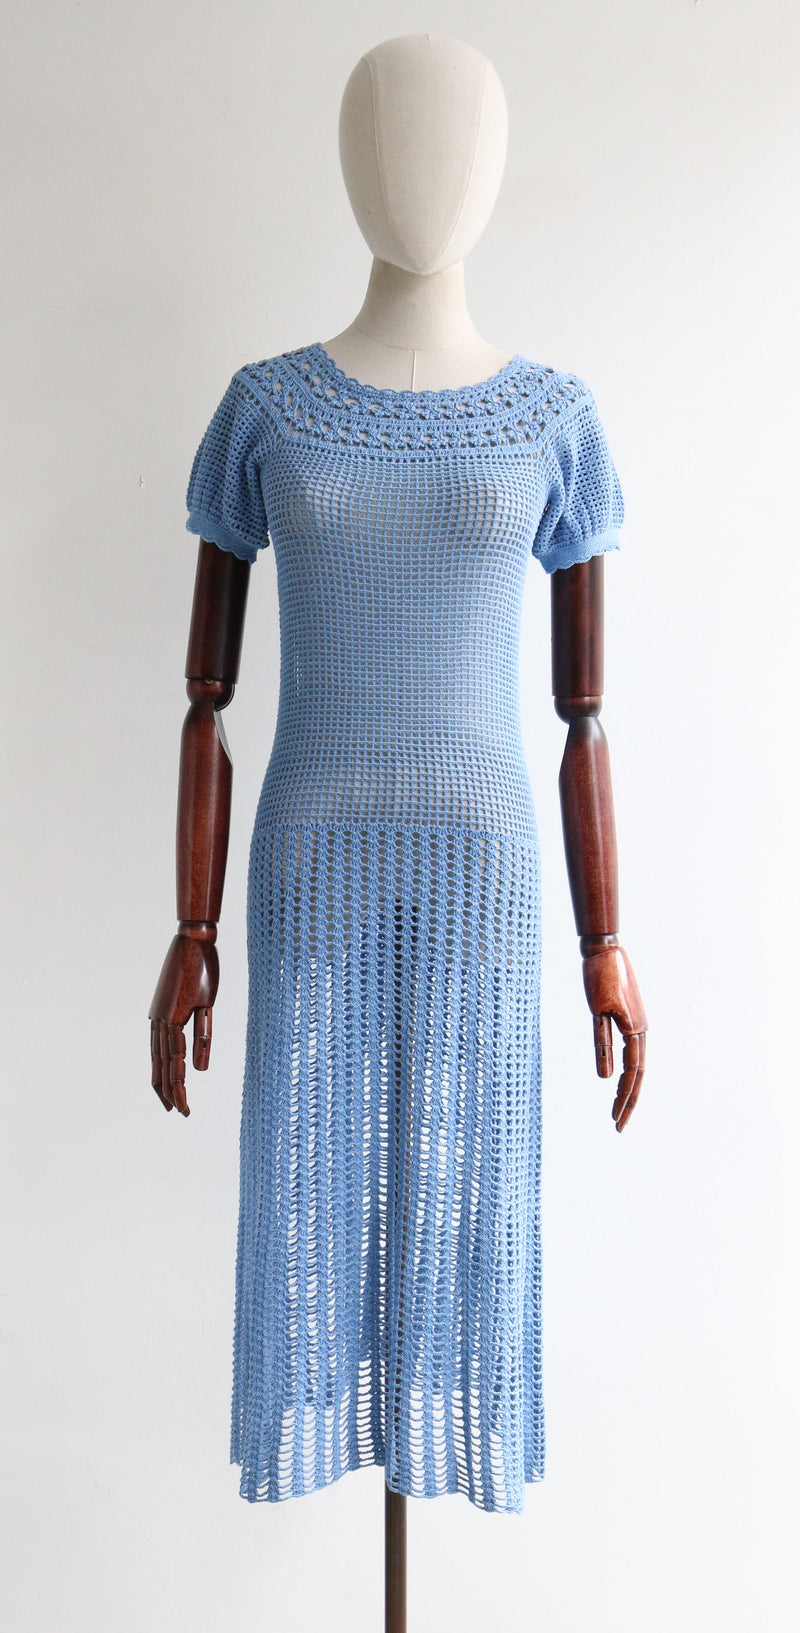 "Faraway Skies" Vintage 1960's Sky Blue Cotton Crochet Dress UK 6-8 US 2-4